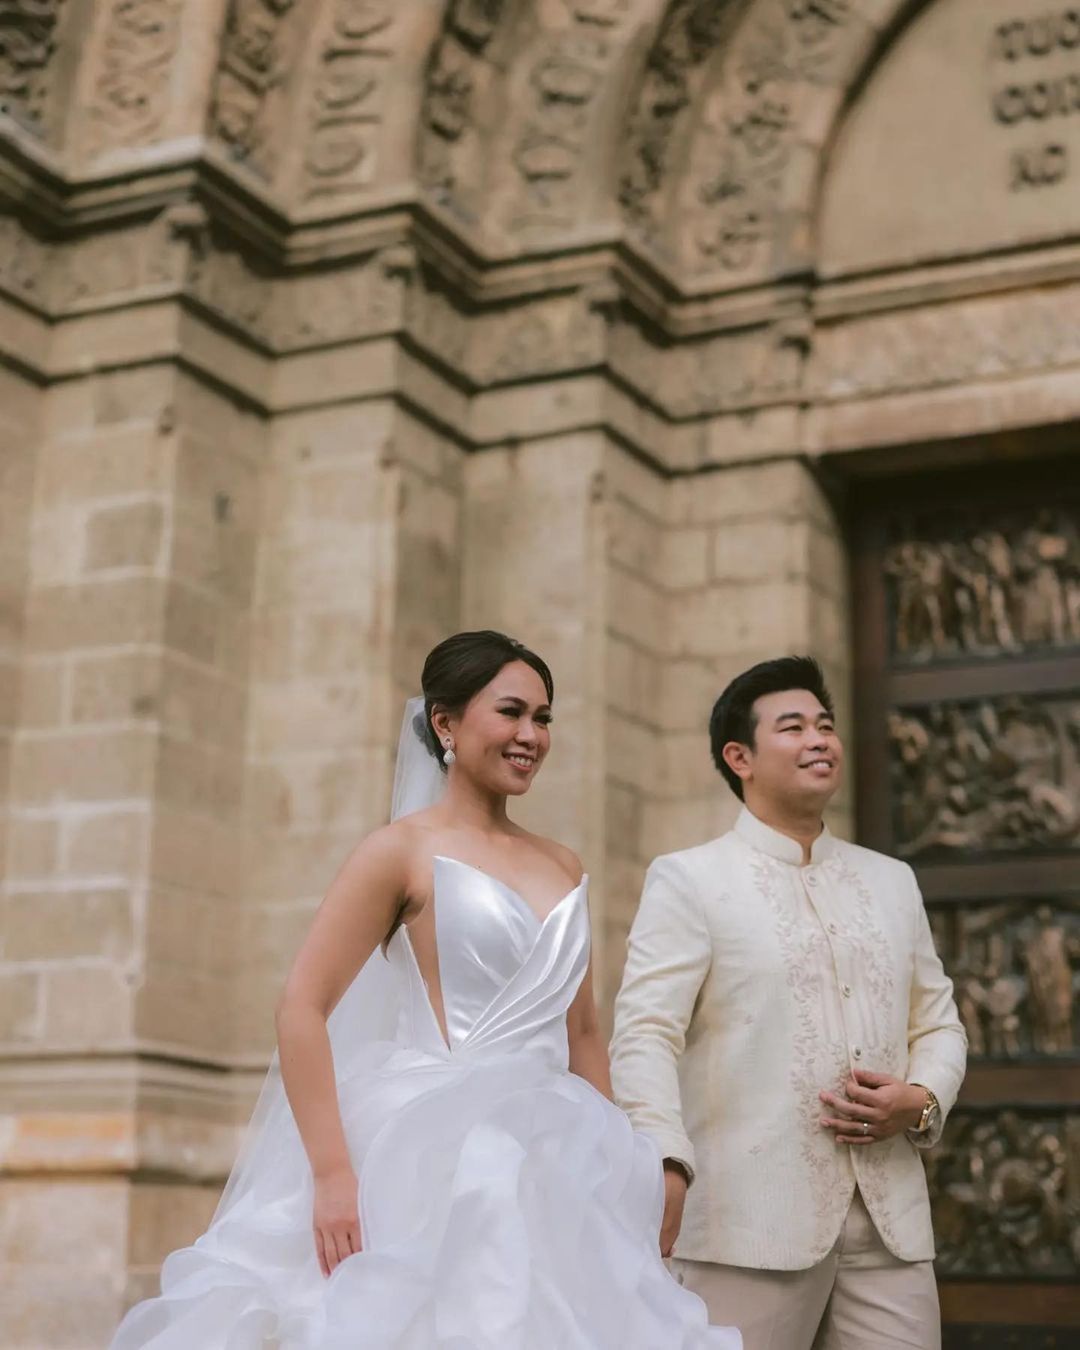 Traditional Filipino wedding bride and groom attire.